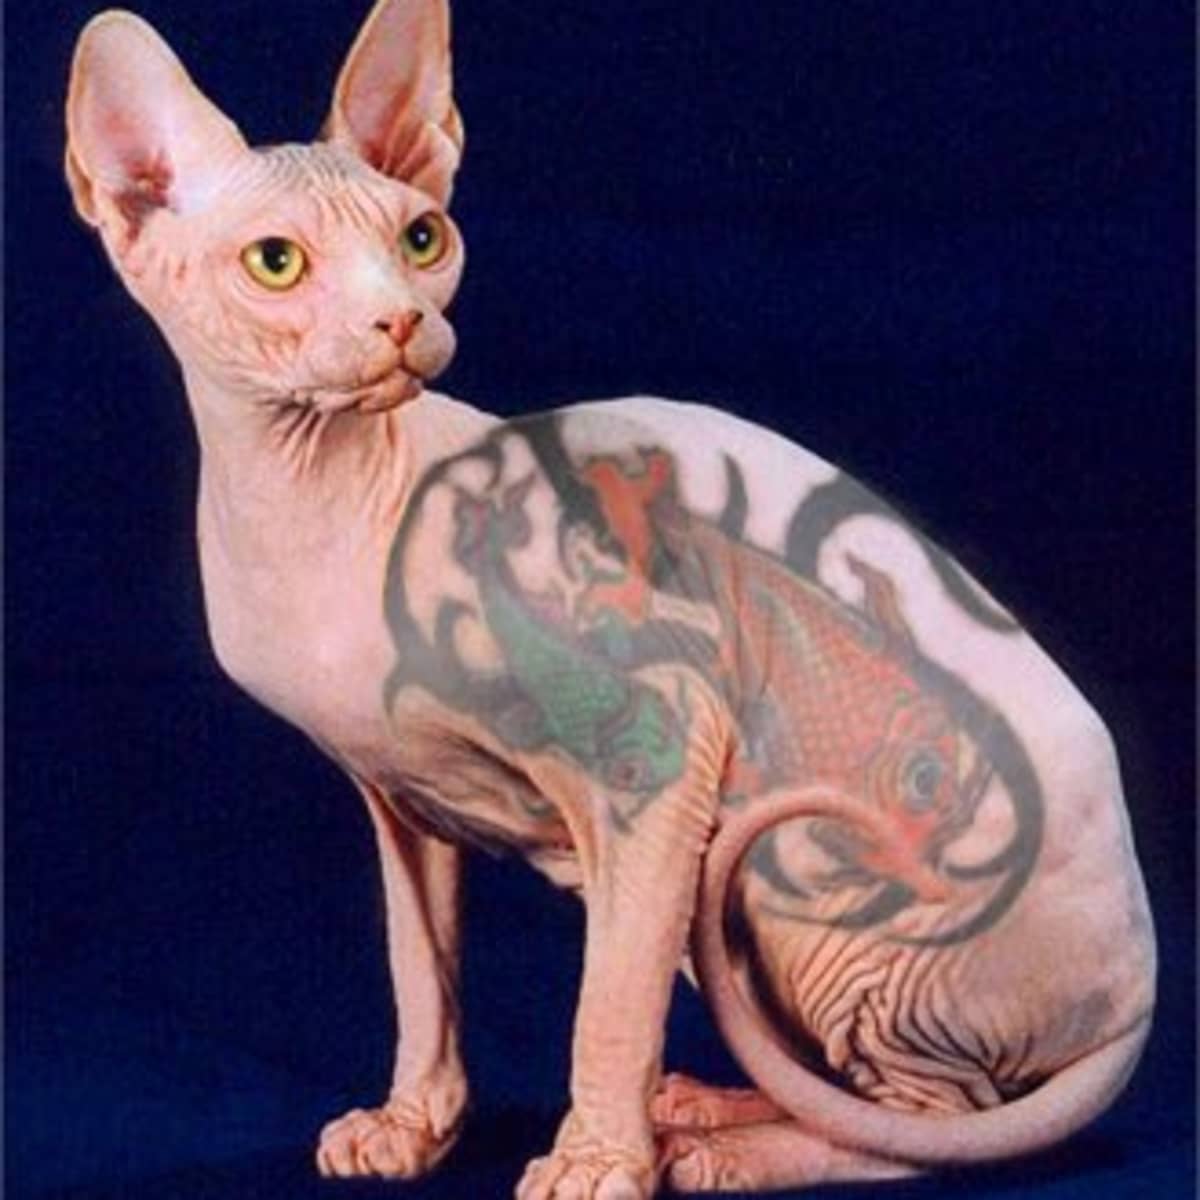 Tattooing Sphynx (Hairless) Cats Is Cruel - PetHelpful